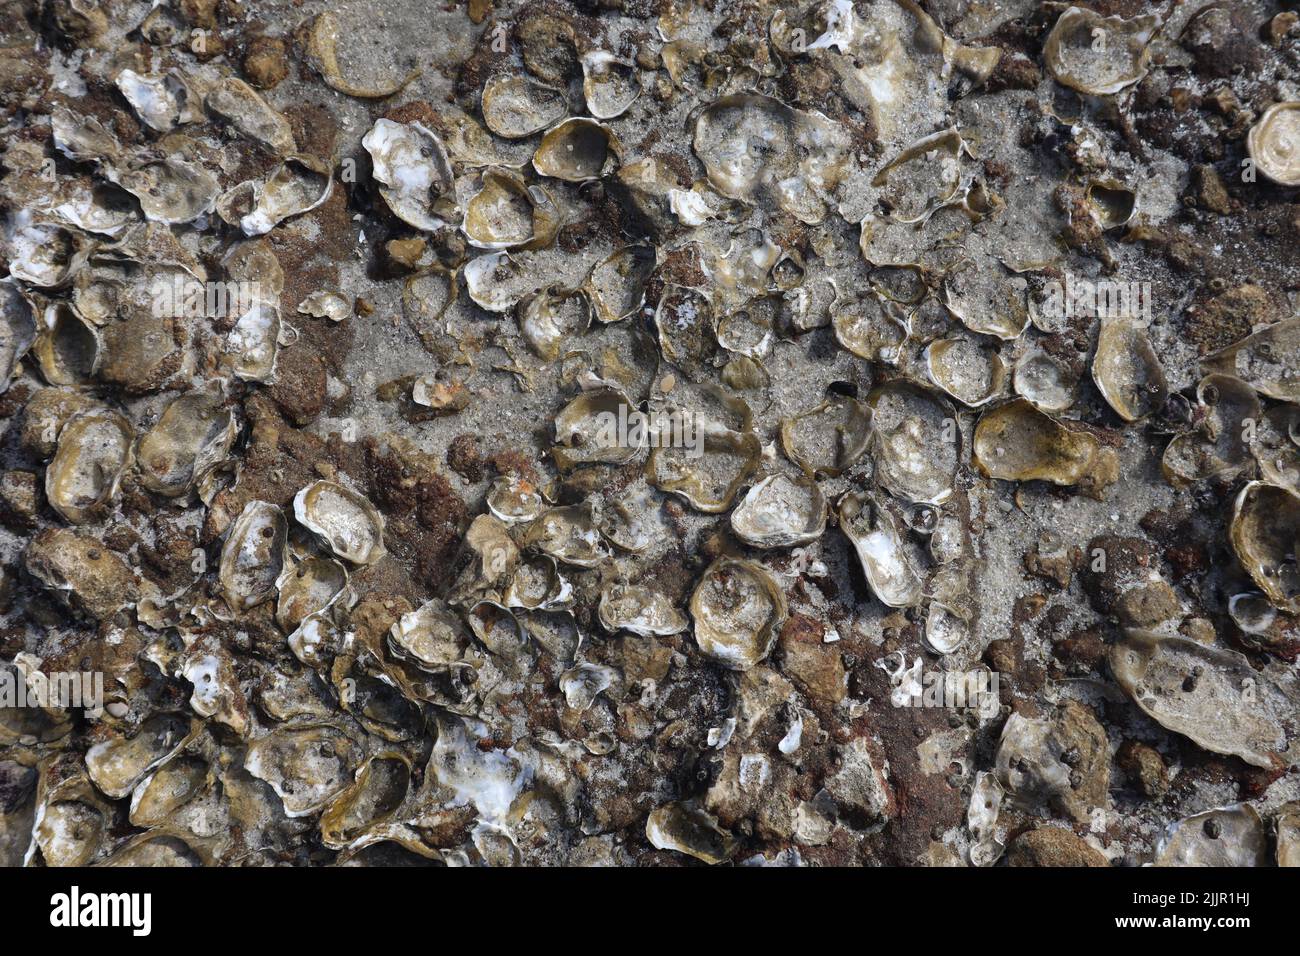 https://c8.alamy.com/comp/2JJR1HJ/a-closeup-shot-of-sharp-barnacles-on-a-rock-2JJR1HJ.jpg